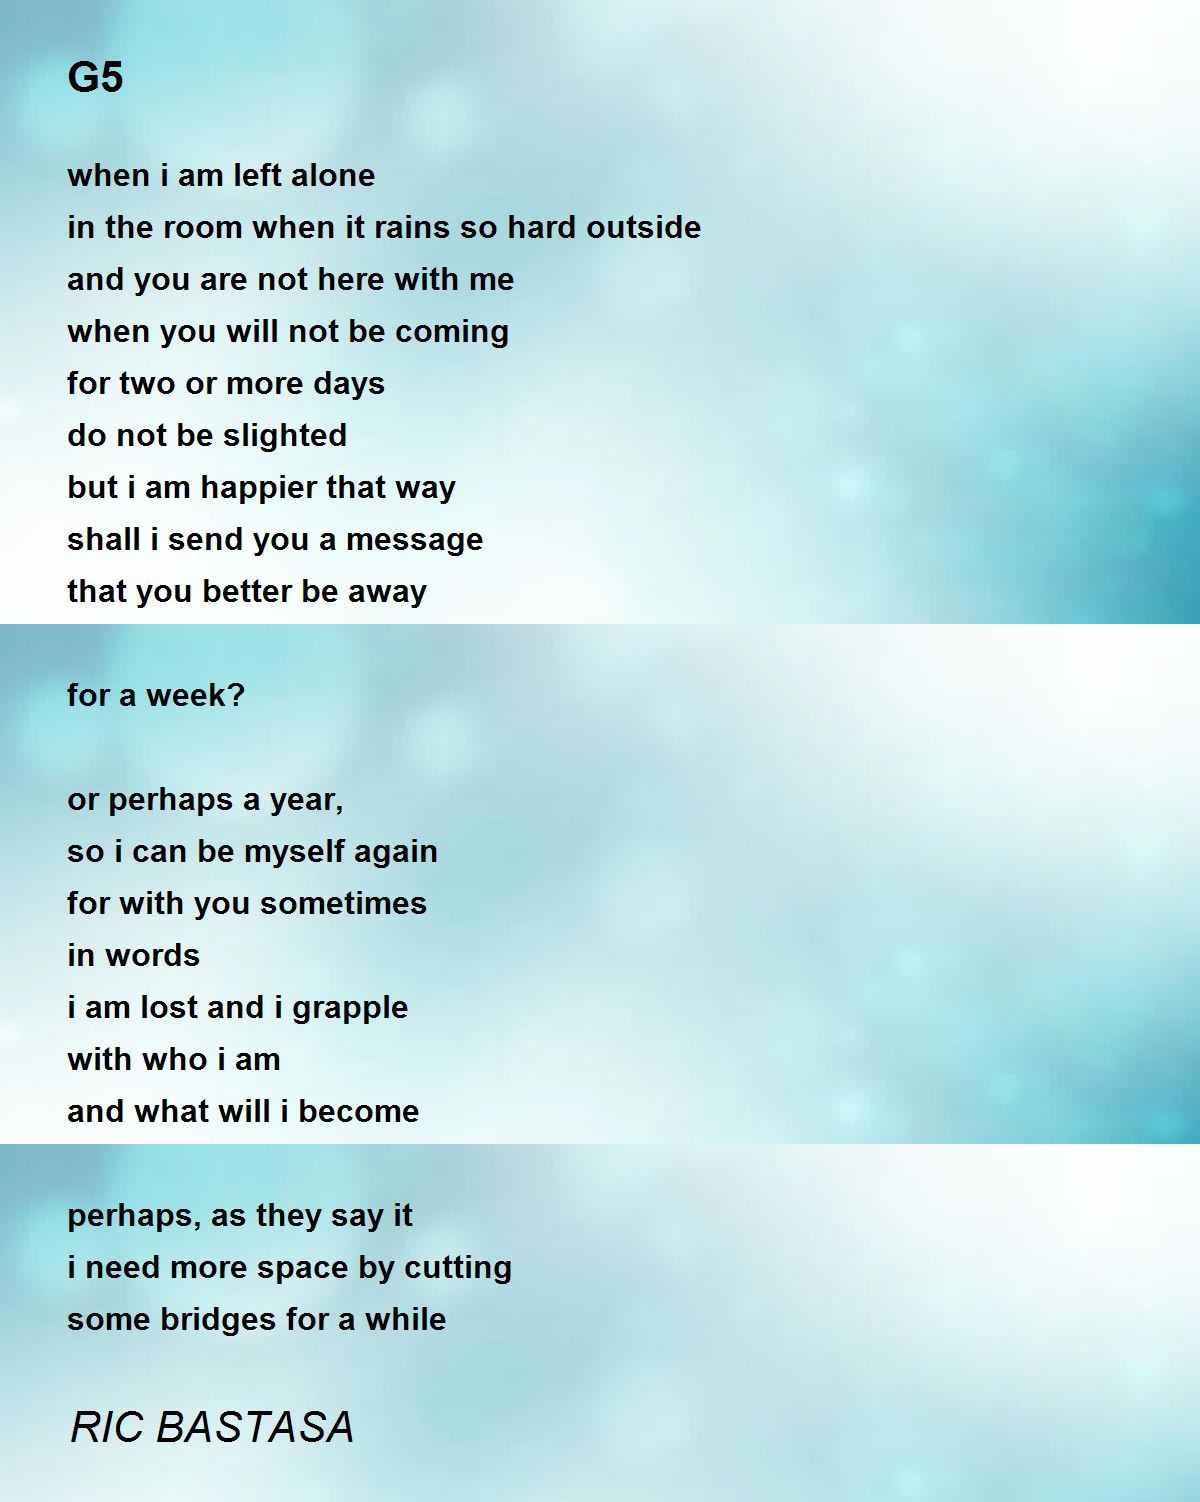 Pablo Acosta - song and lyrics by Sentiss